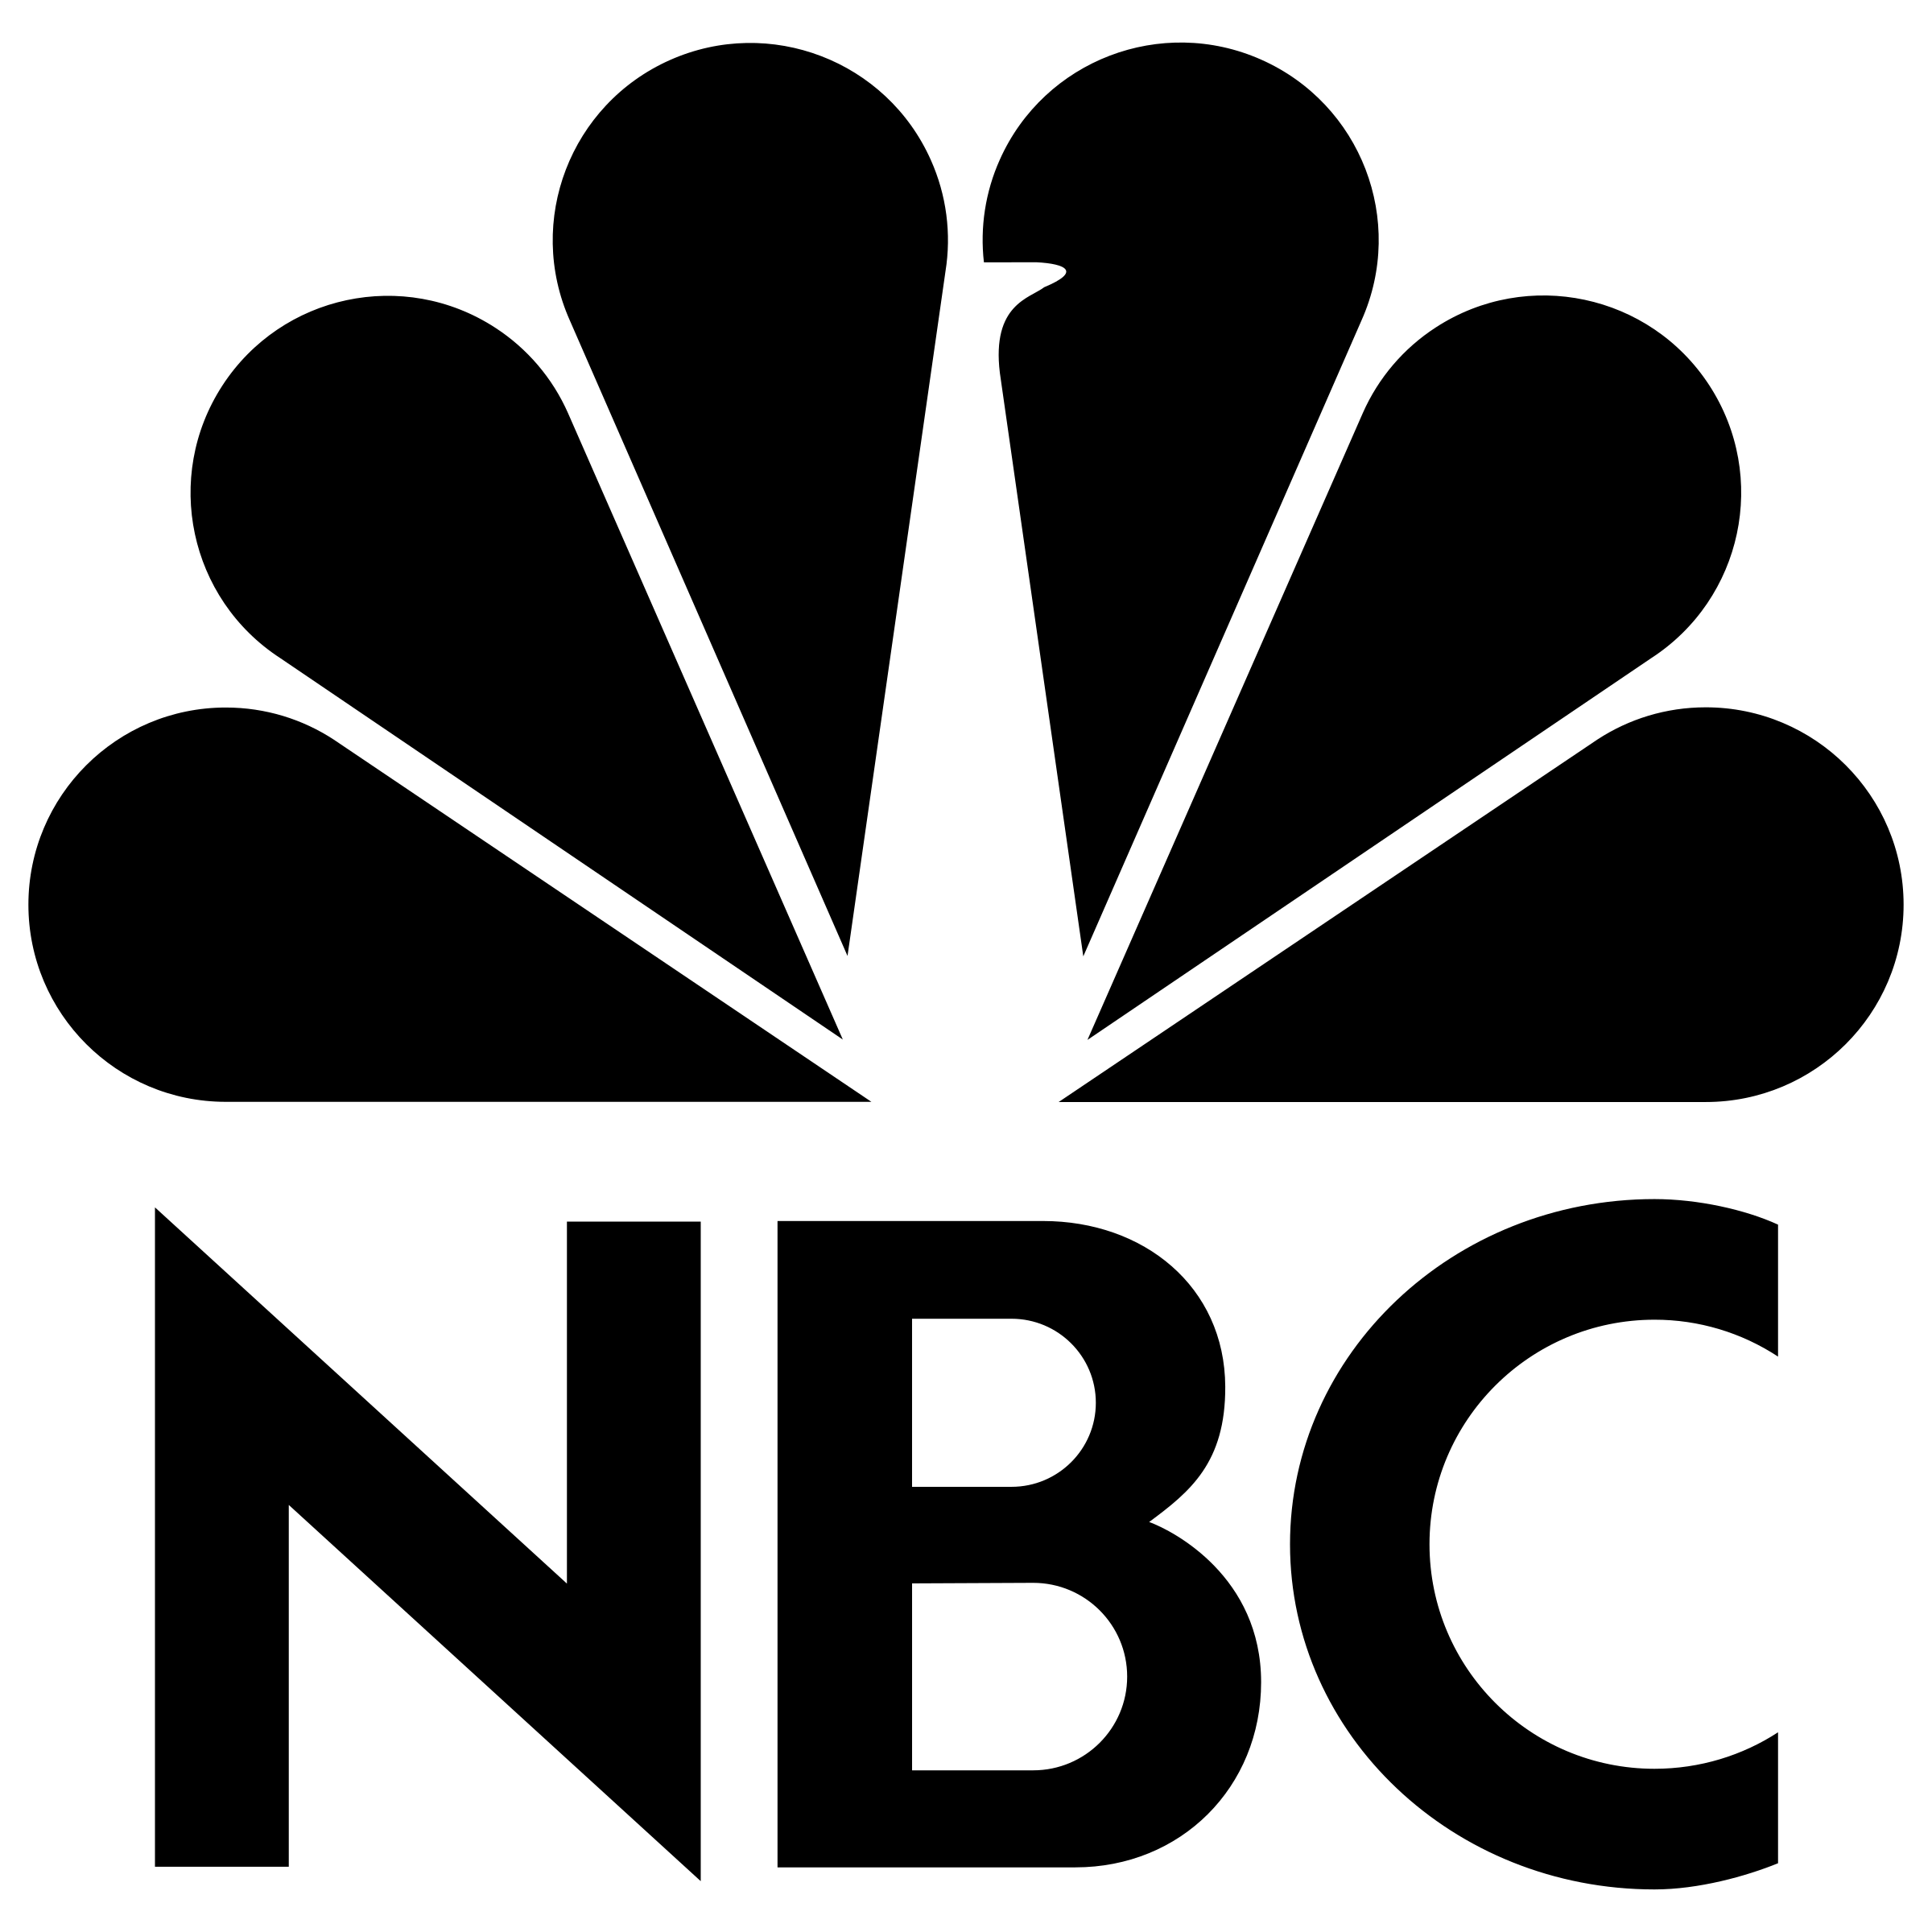 nbc-logo-black-and-white.png